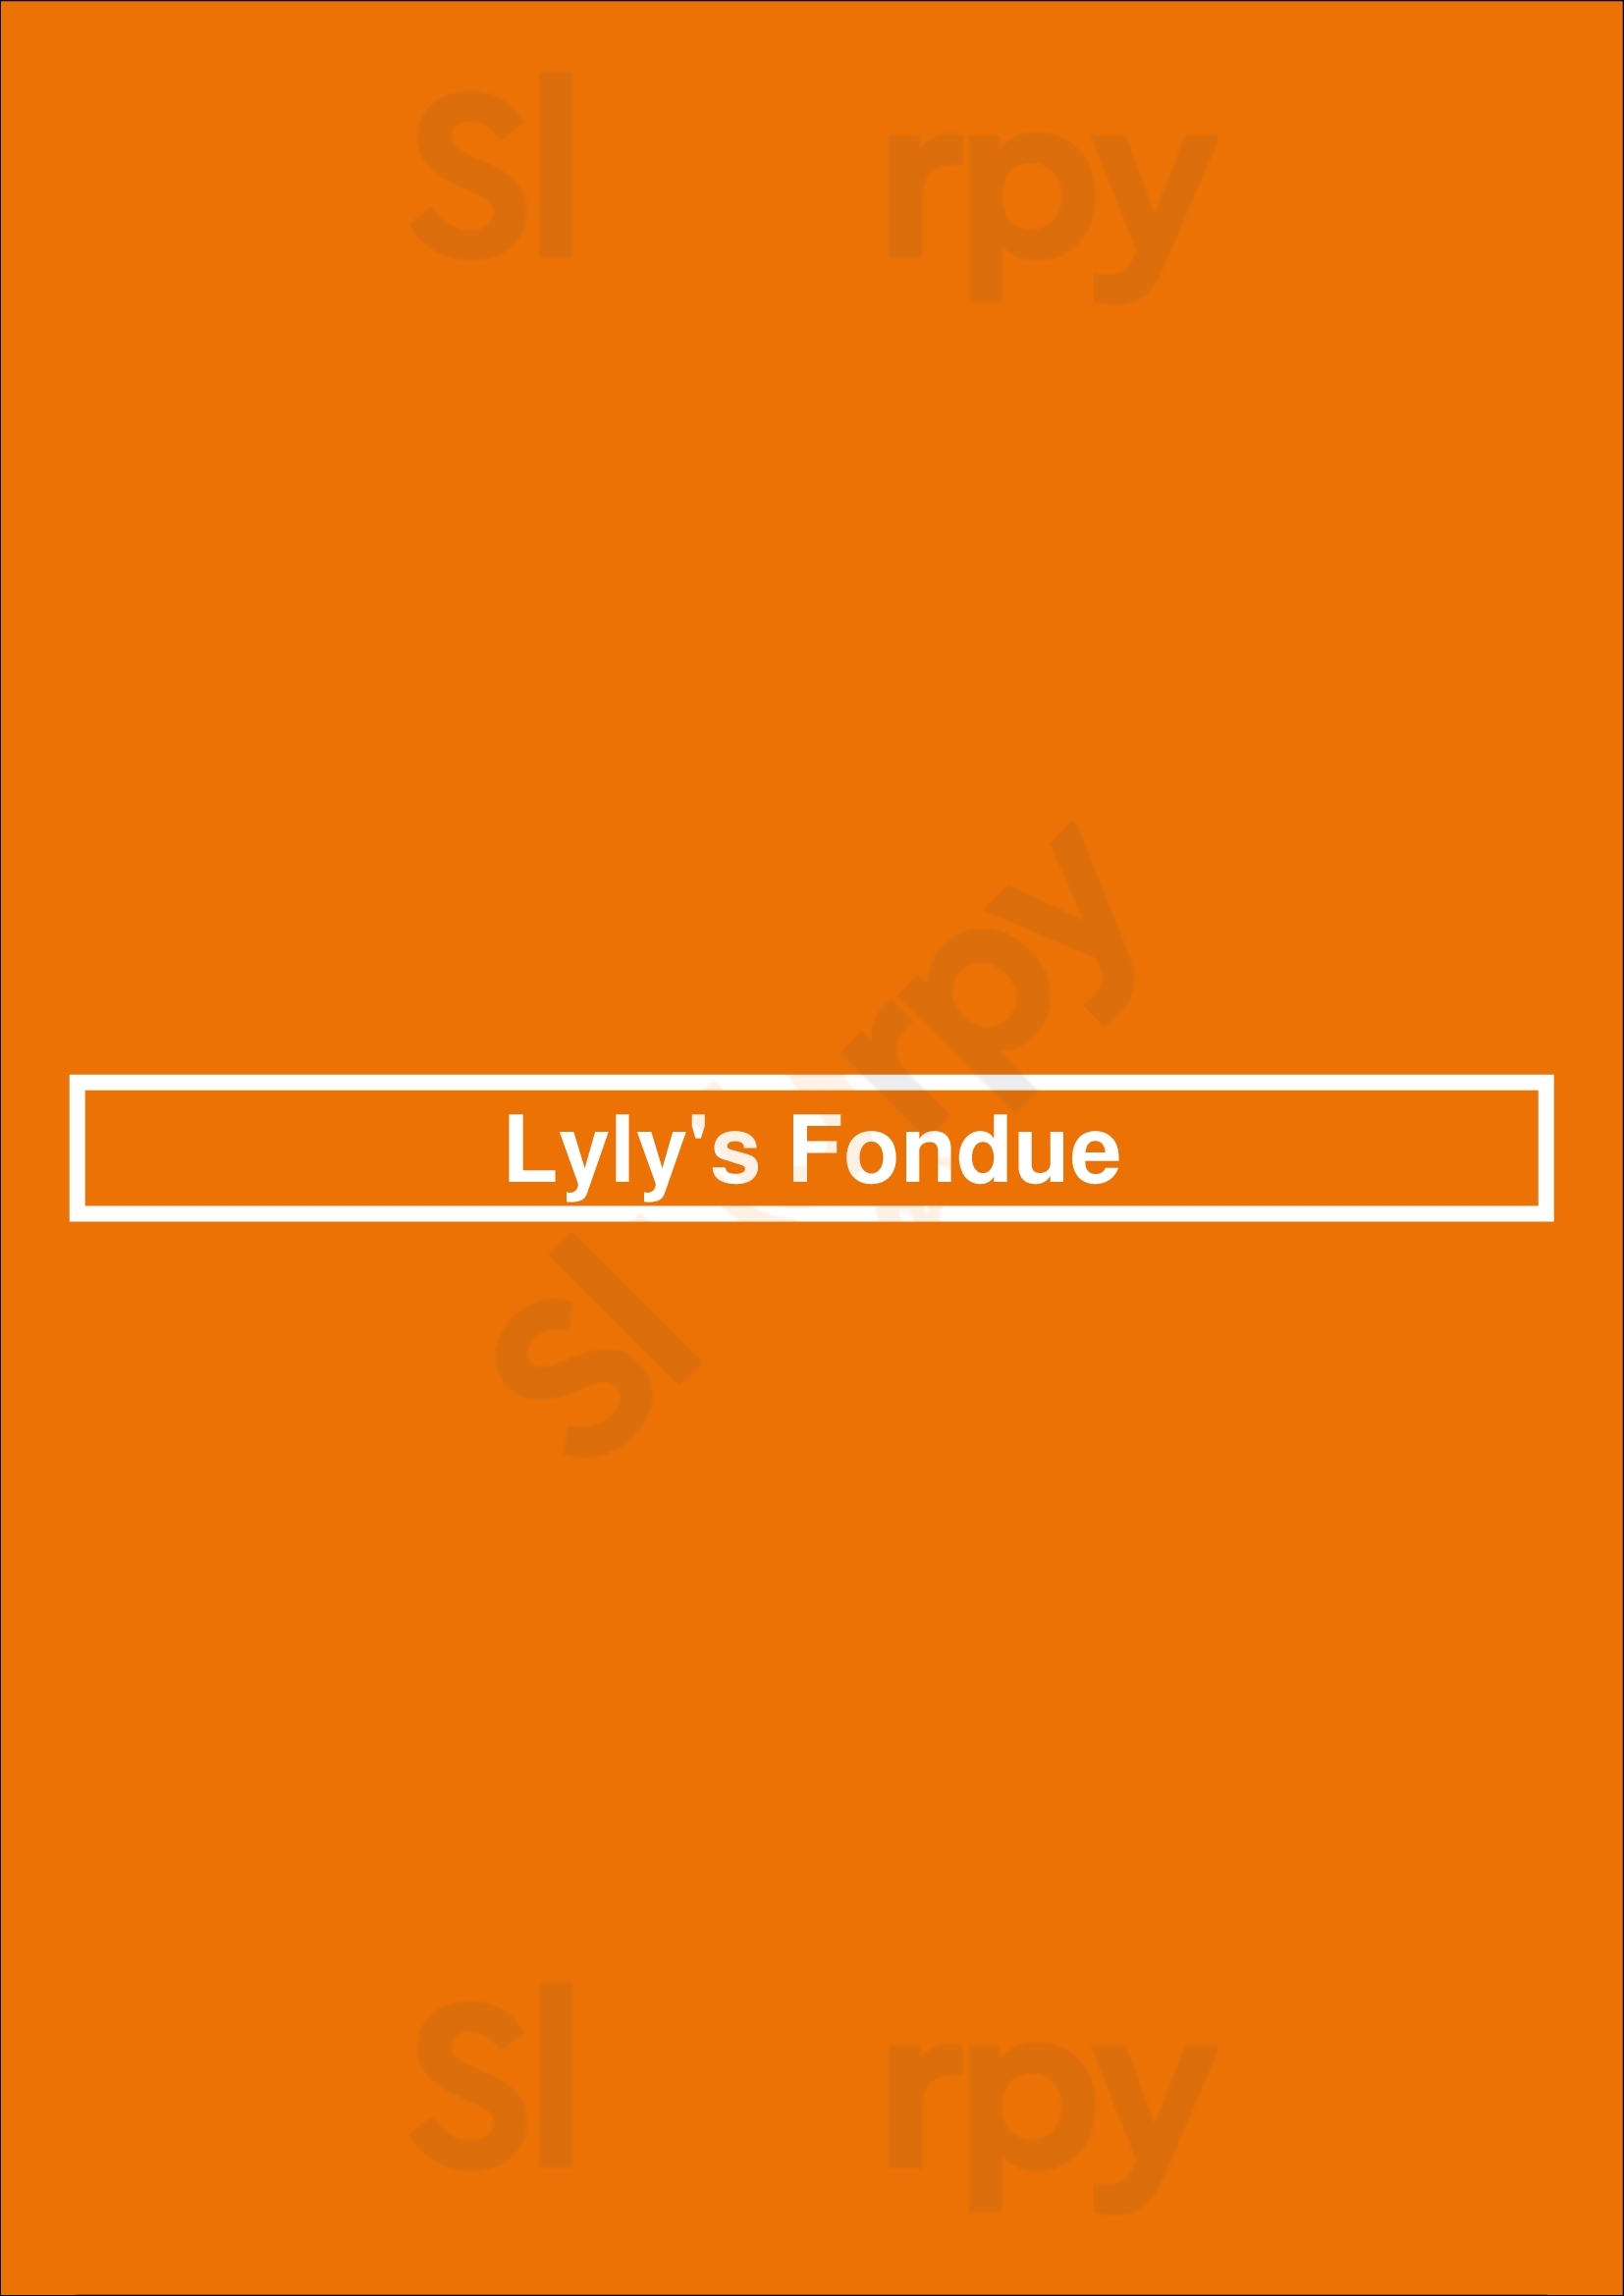 Lyly's Fondue Bruxelles Menu - 1